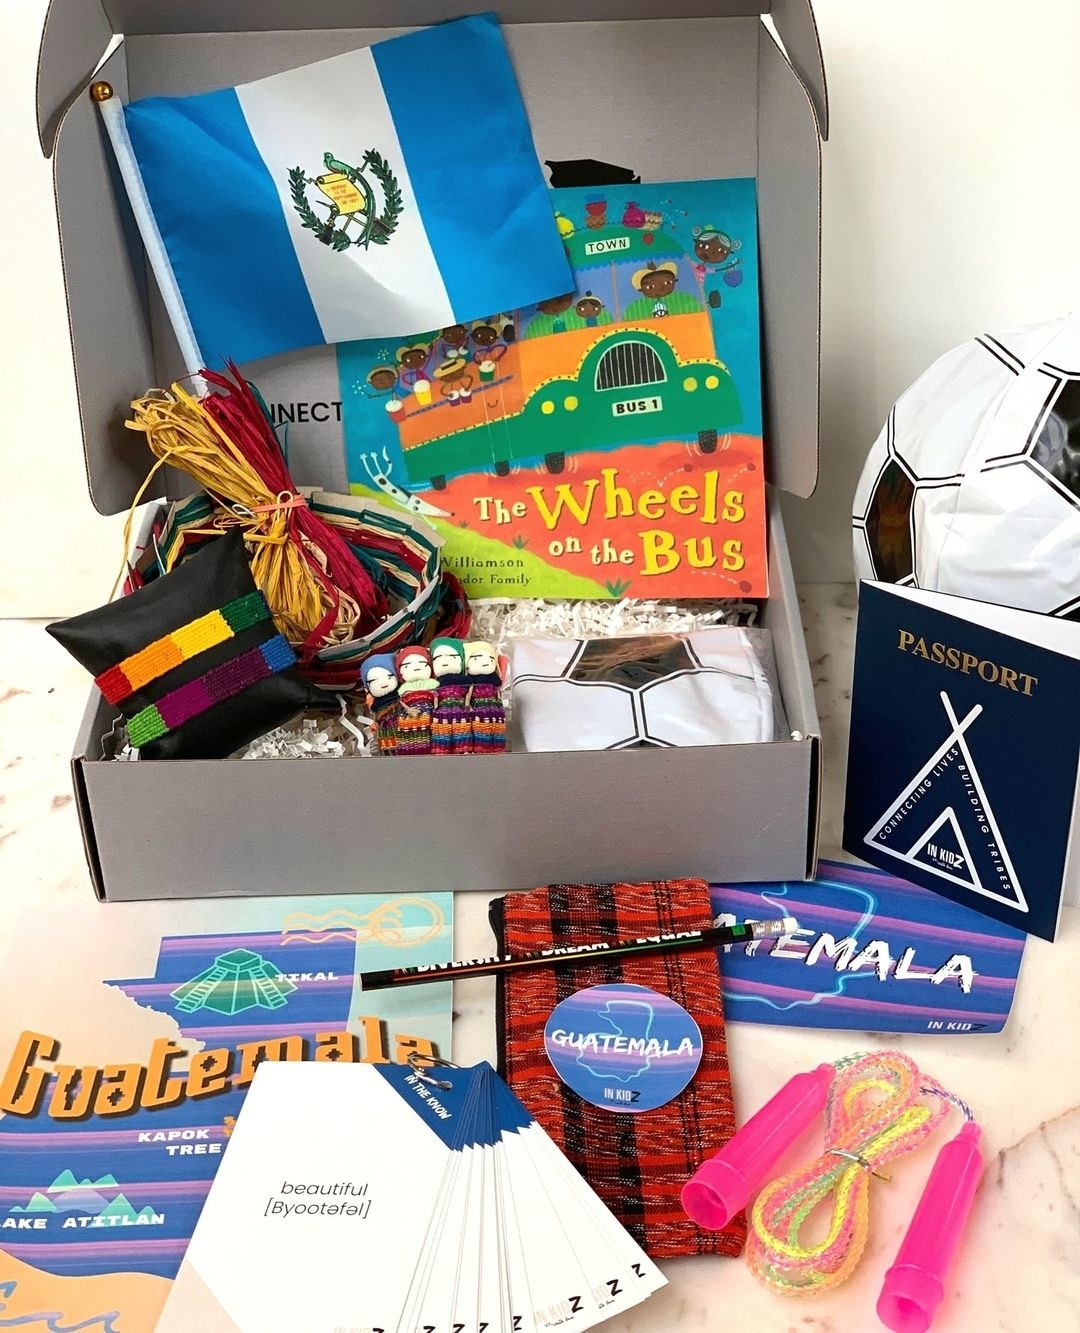 The Guatemala Box from In Kidz